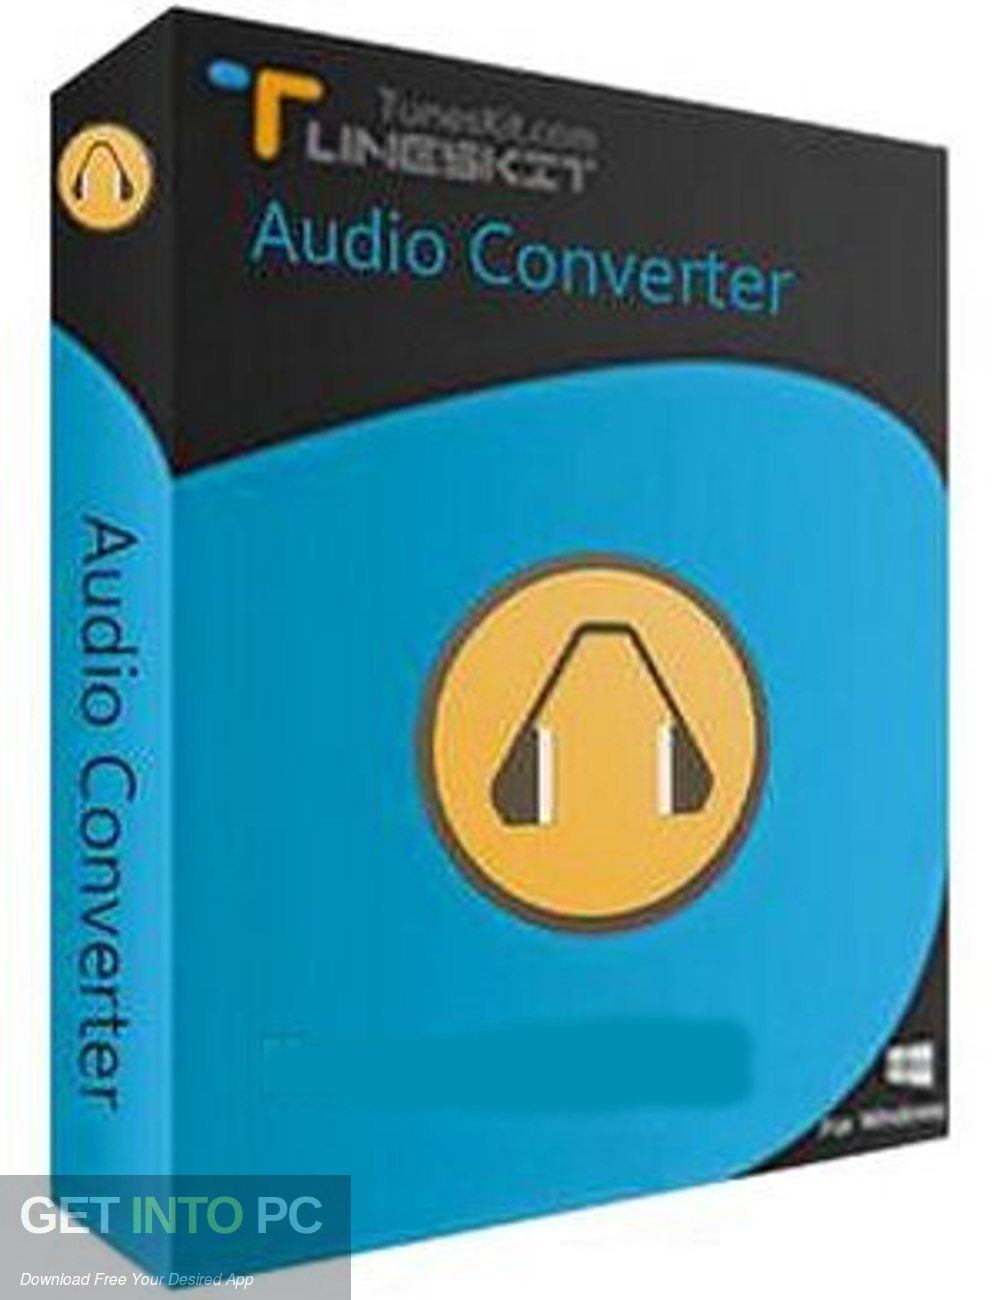 Get tune net. Картинки TUNESKIT Audio Converter.